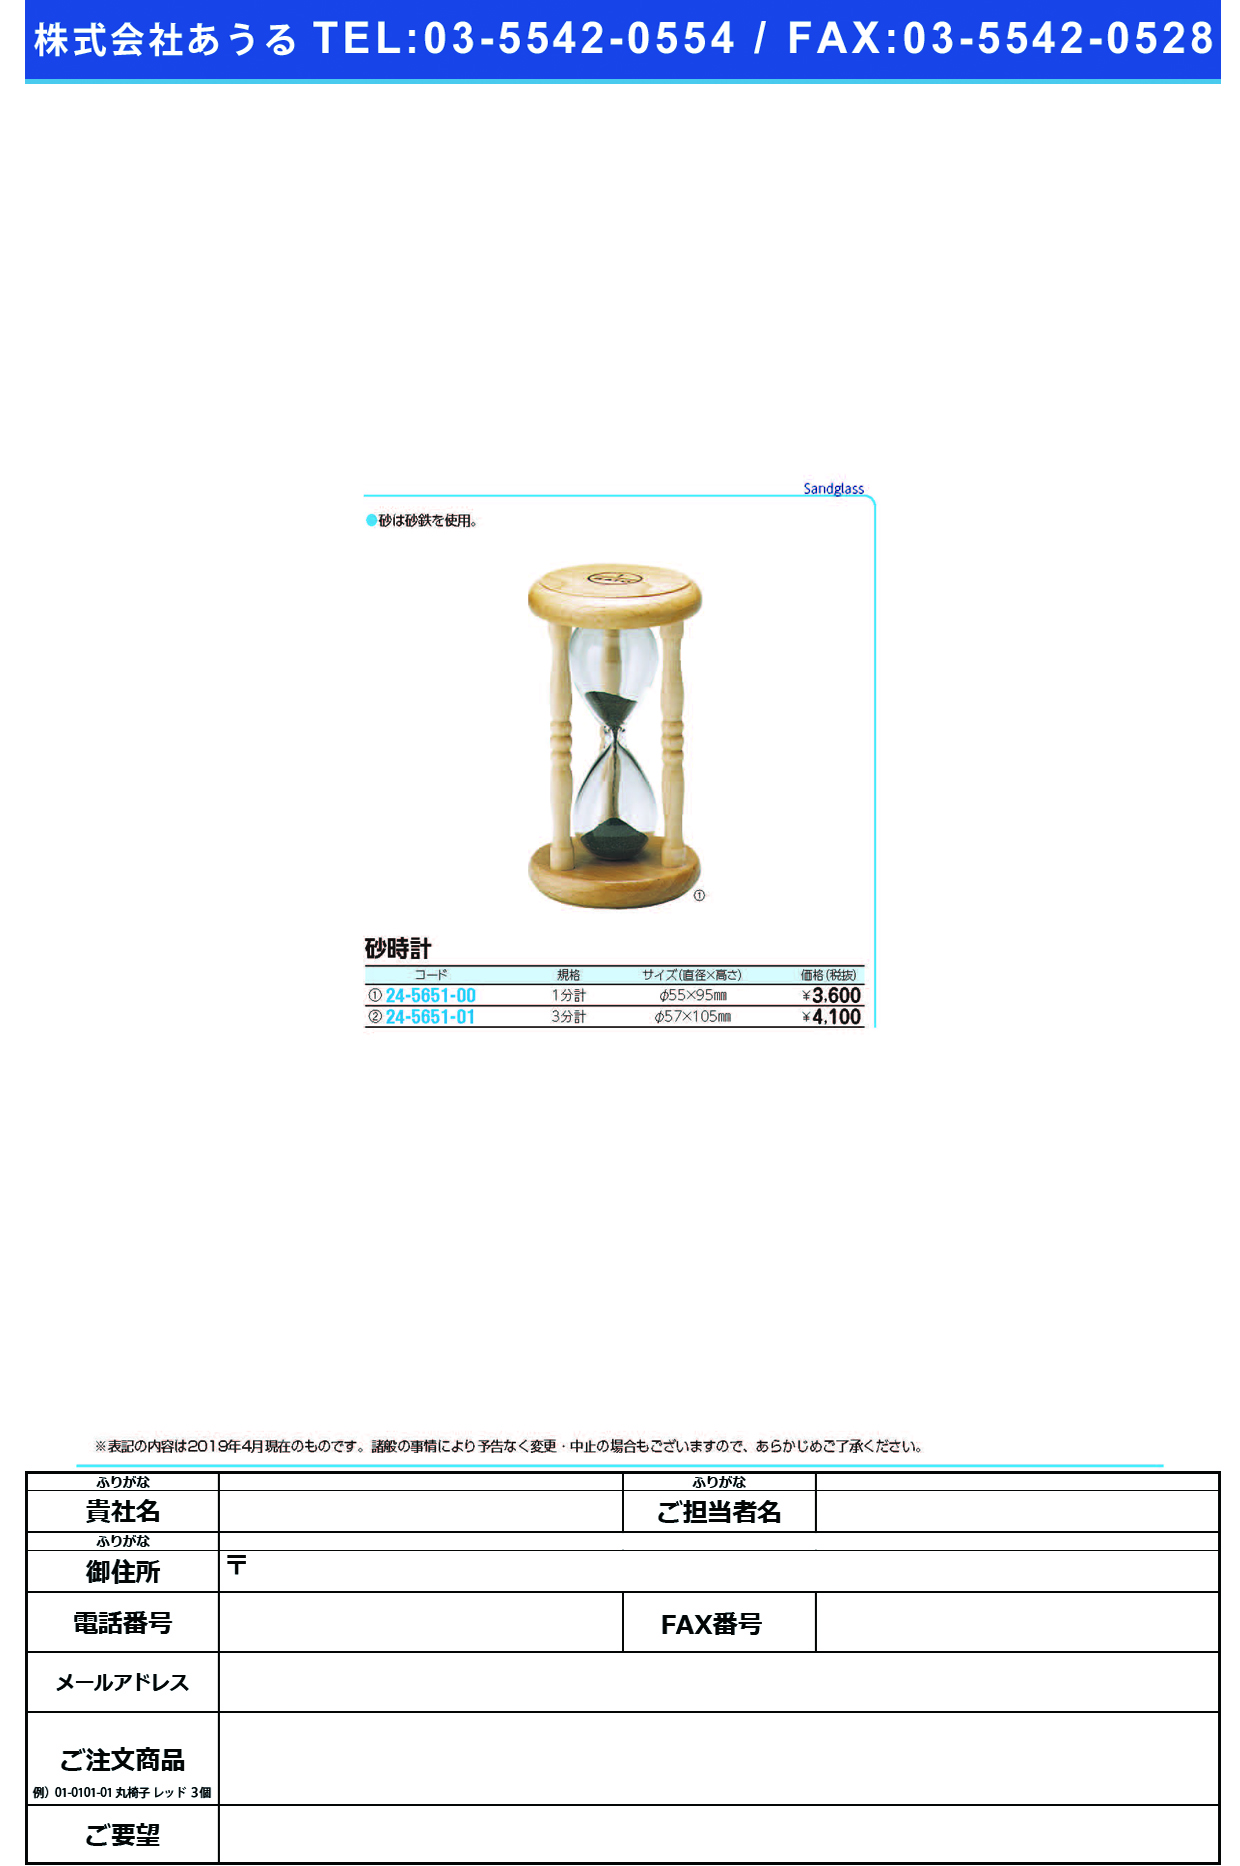 (24-5651-00)砂時計（１分計） 1734-01 ｽﾅﾄﾞｹｲ(1ﾌﾝｹｲ)【1個単位】【2019年カタログ商品】